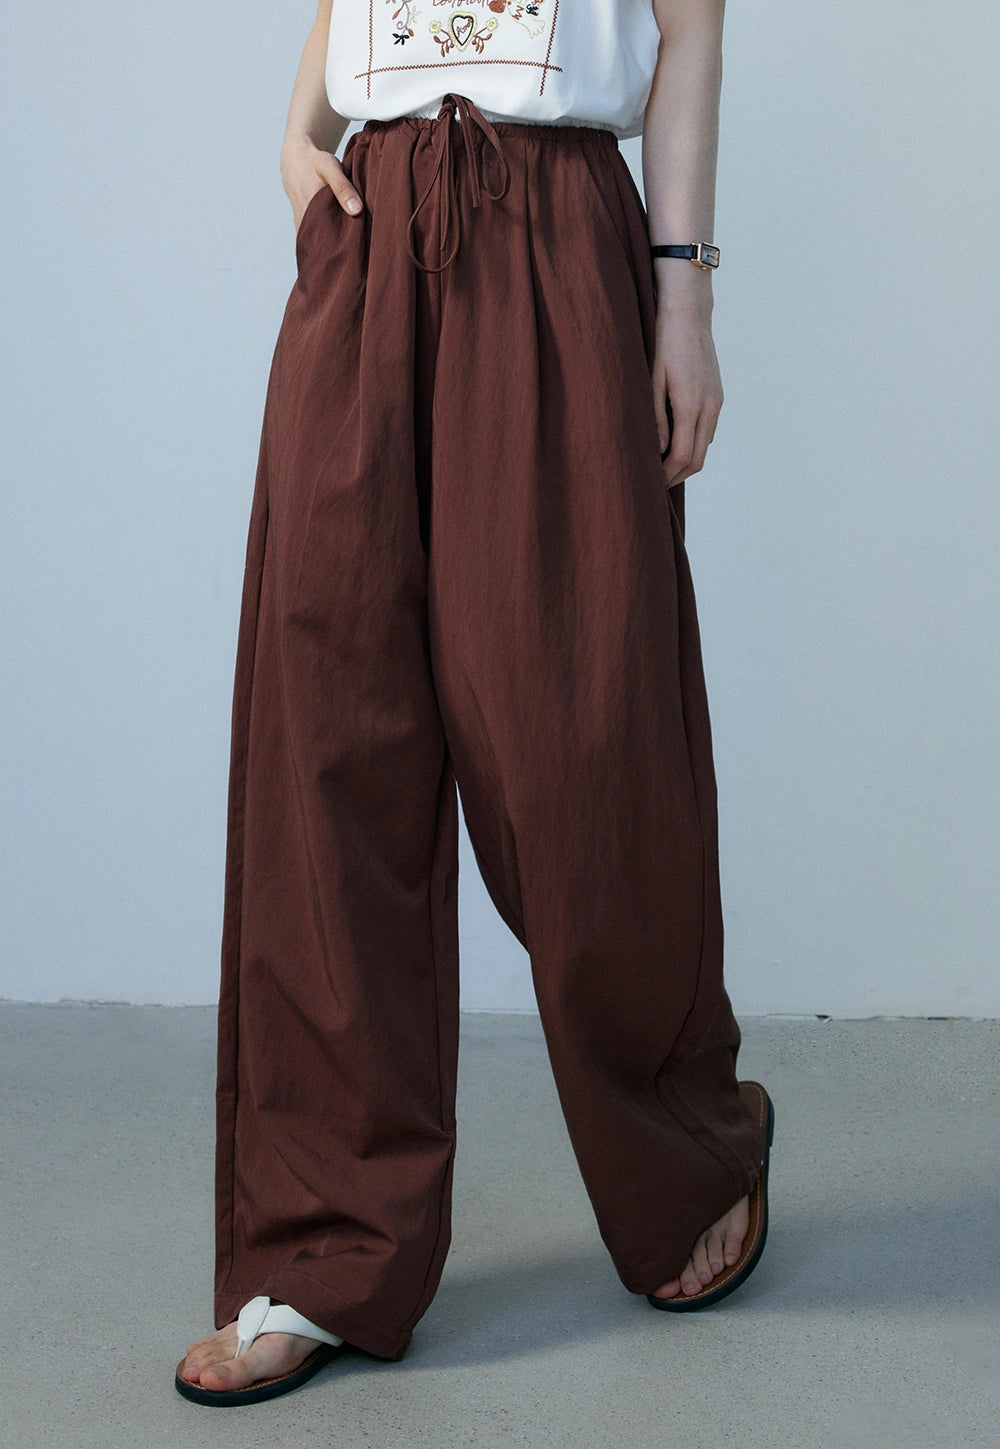 Women's Chocolate Brown Wide-Leg Pants - Drawstring Waist, Flowy and Comfortable